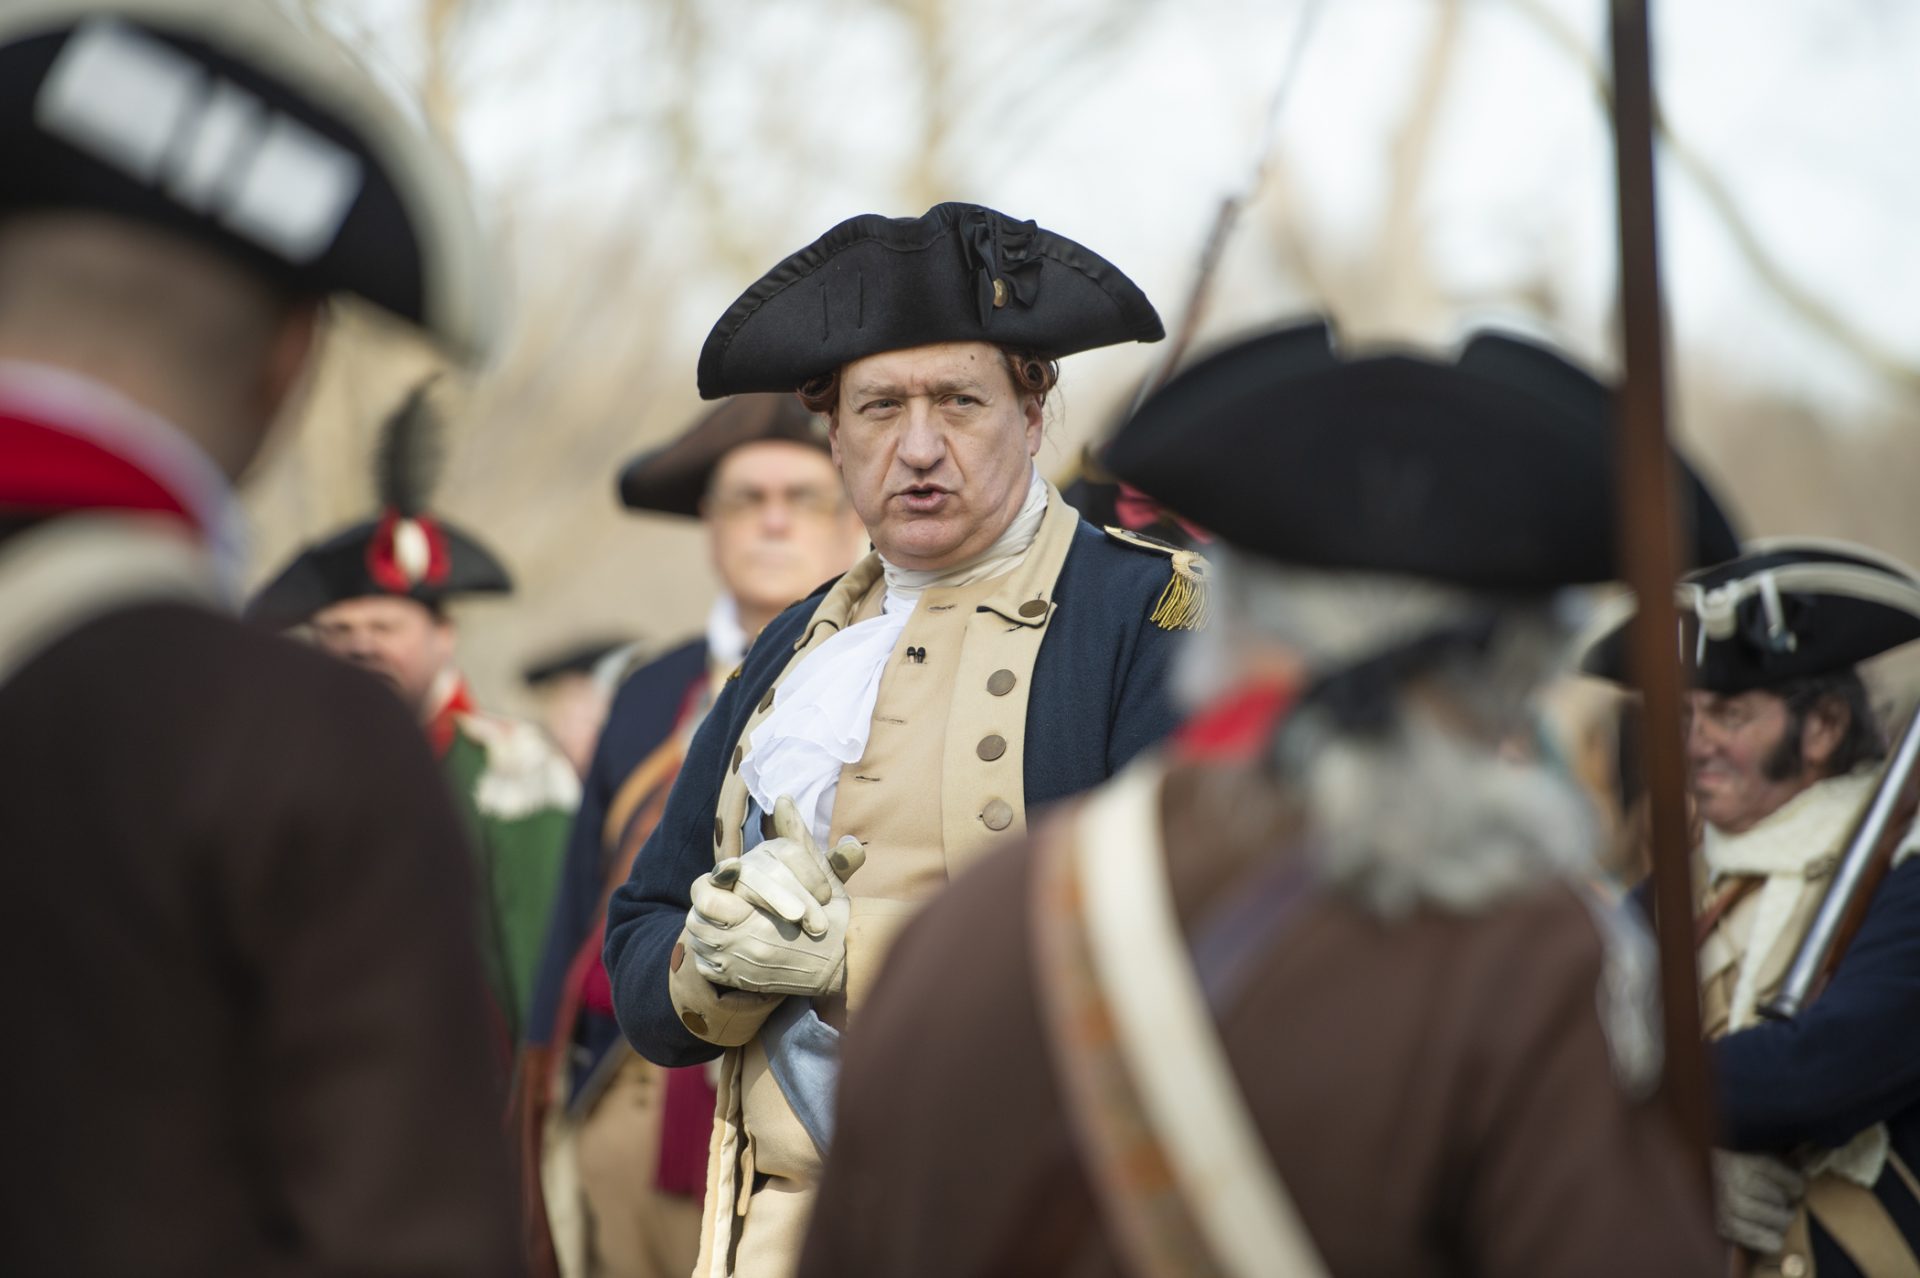 George Washington portrayed by John Godzieba addresses the troops.